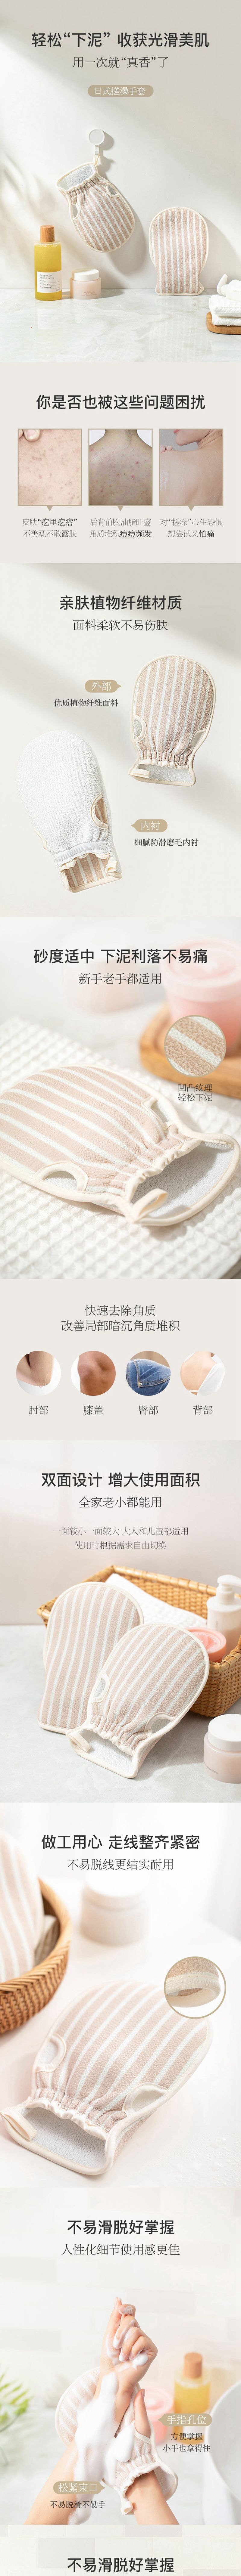 skin-friendly bathing gloves 22x12cm